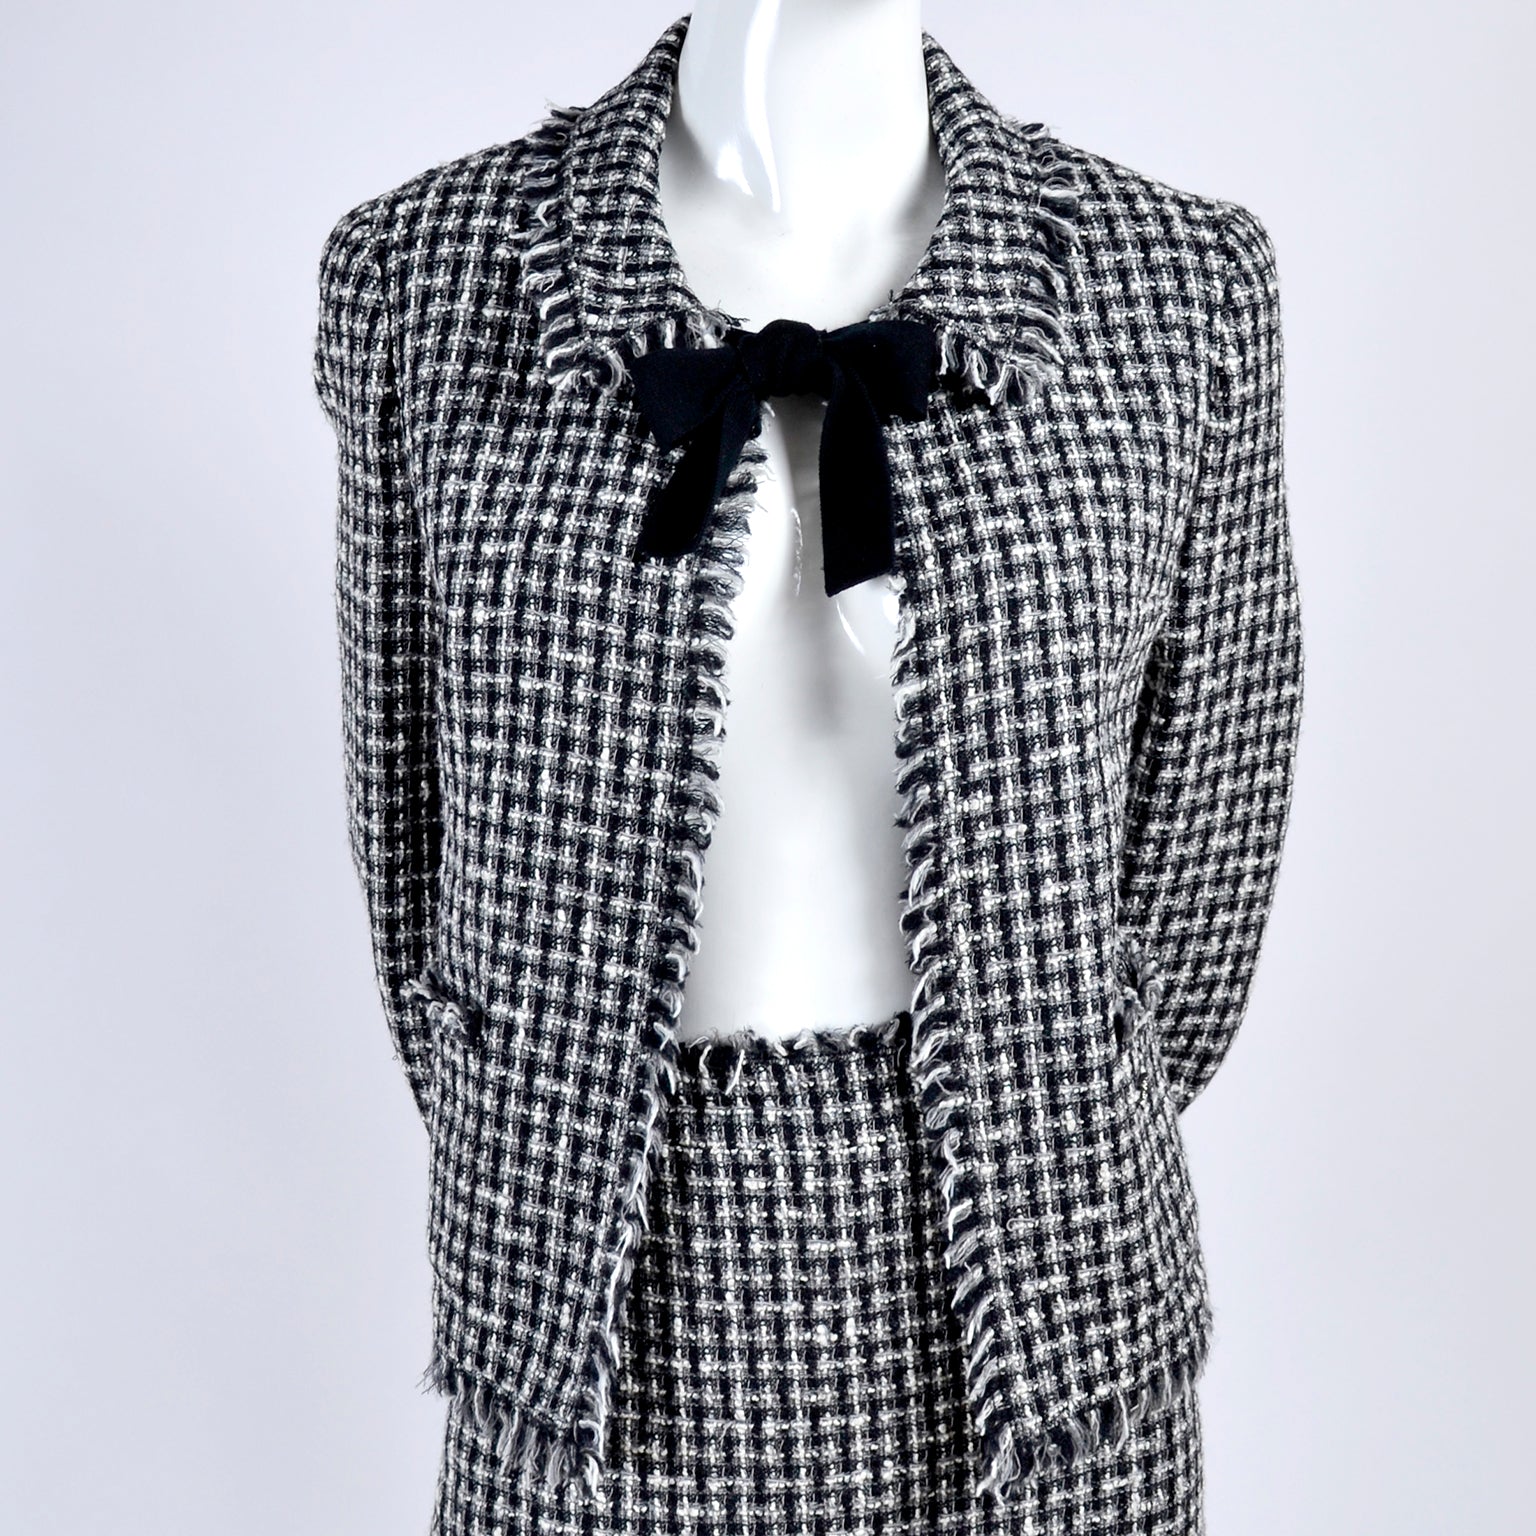 Chanel vintage black-white lesage tweed cardigan